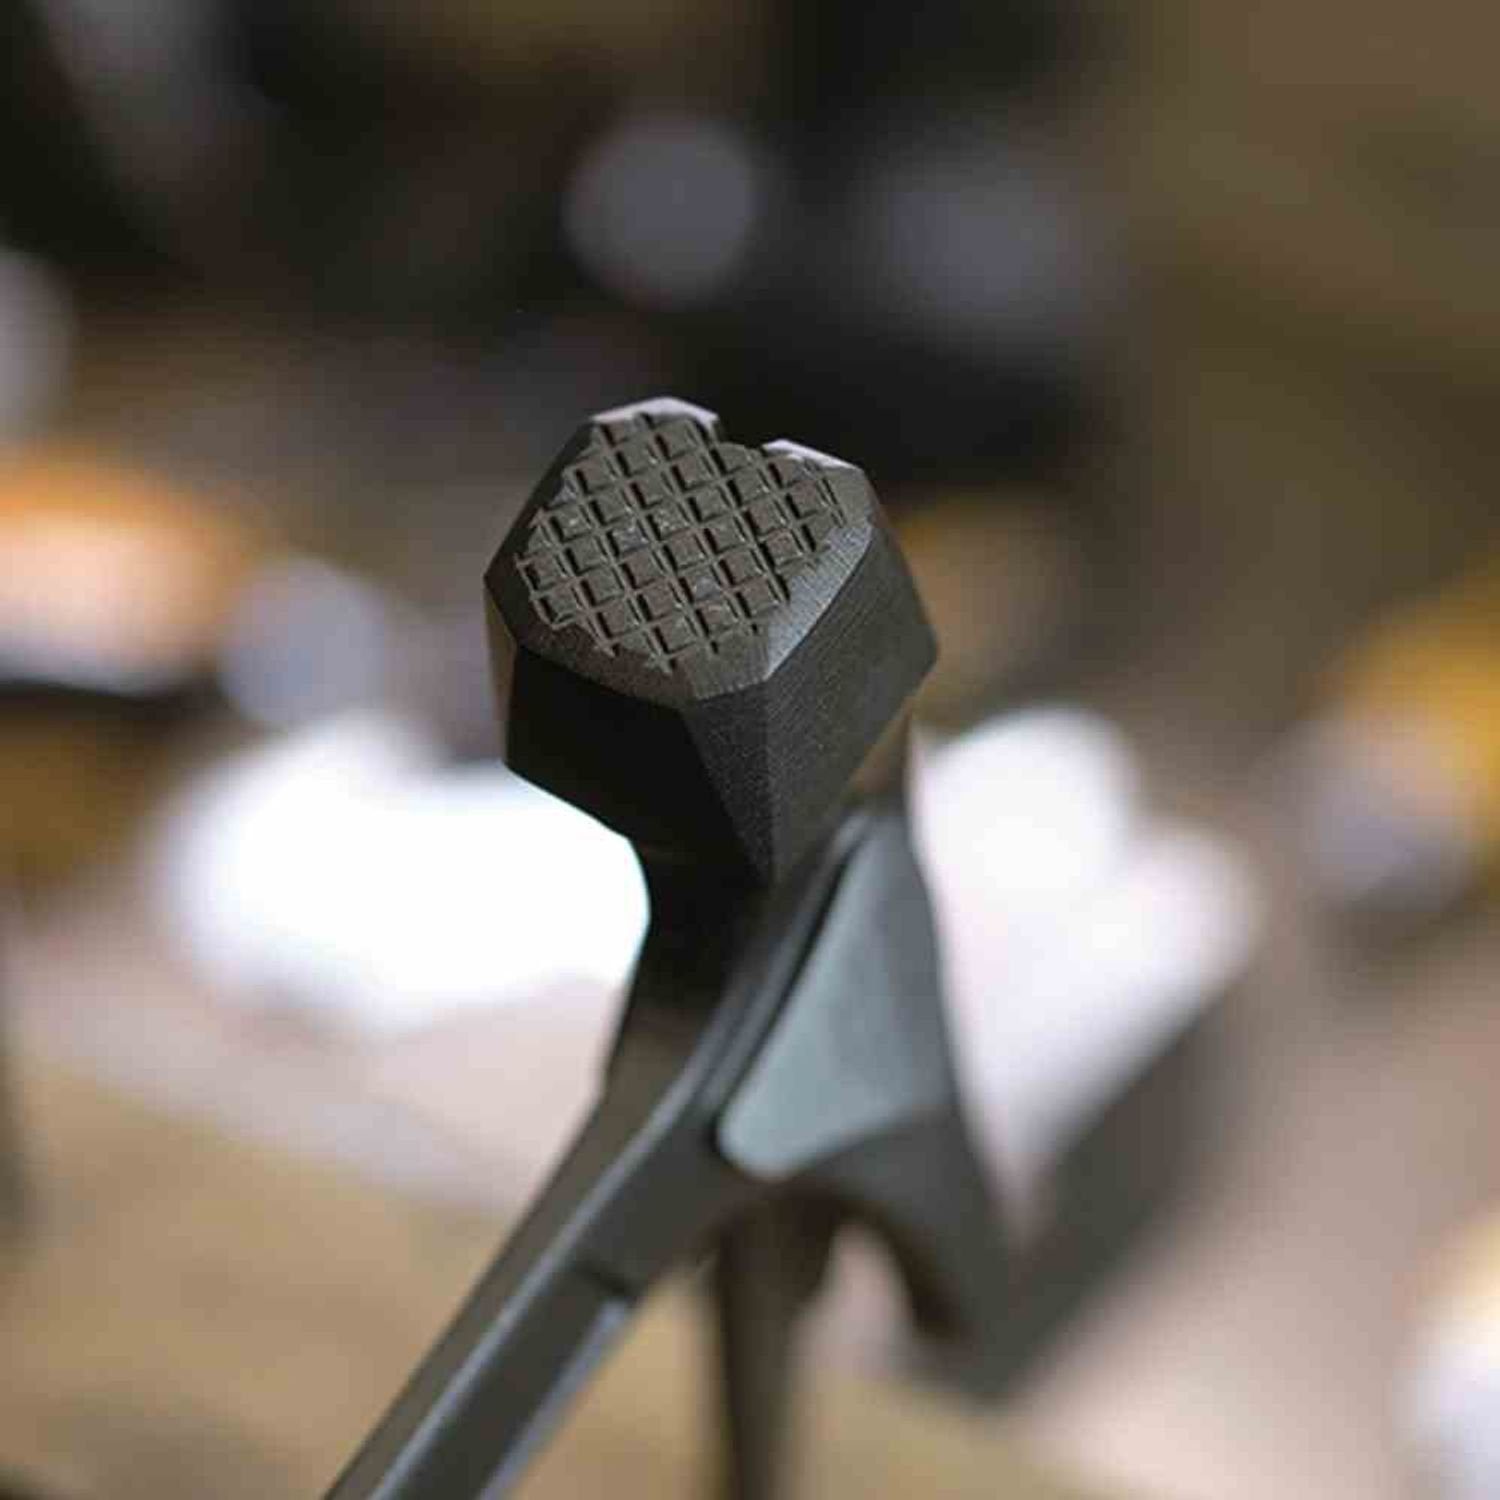 600g mit Magnet, Anti-Vibration Hammer Lattenhammer 2-Komponenten-Griff IRONSIDE